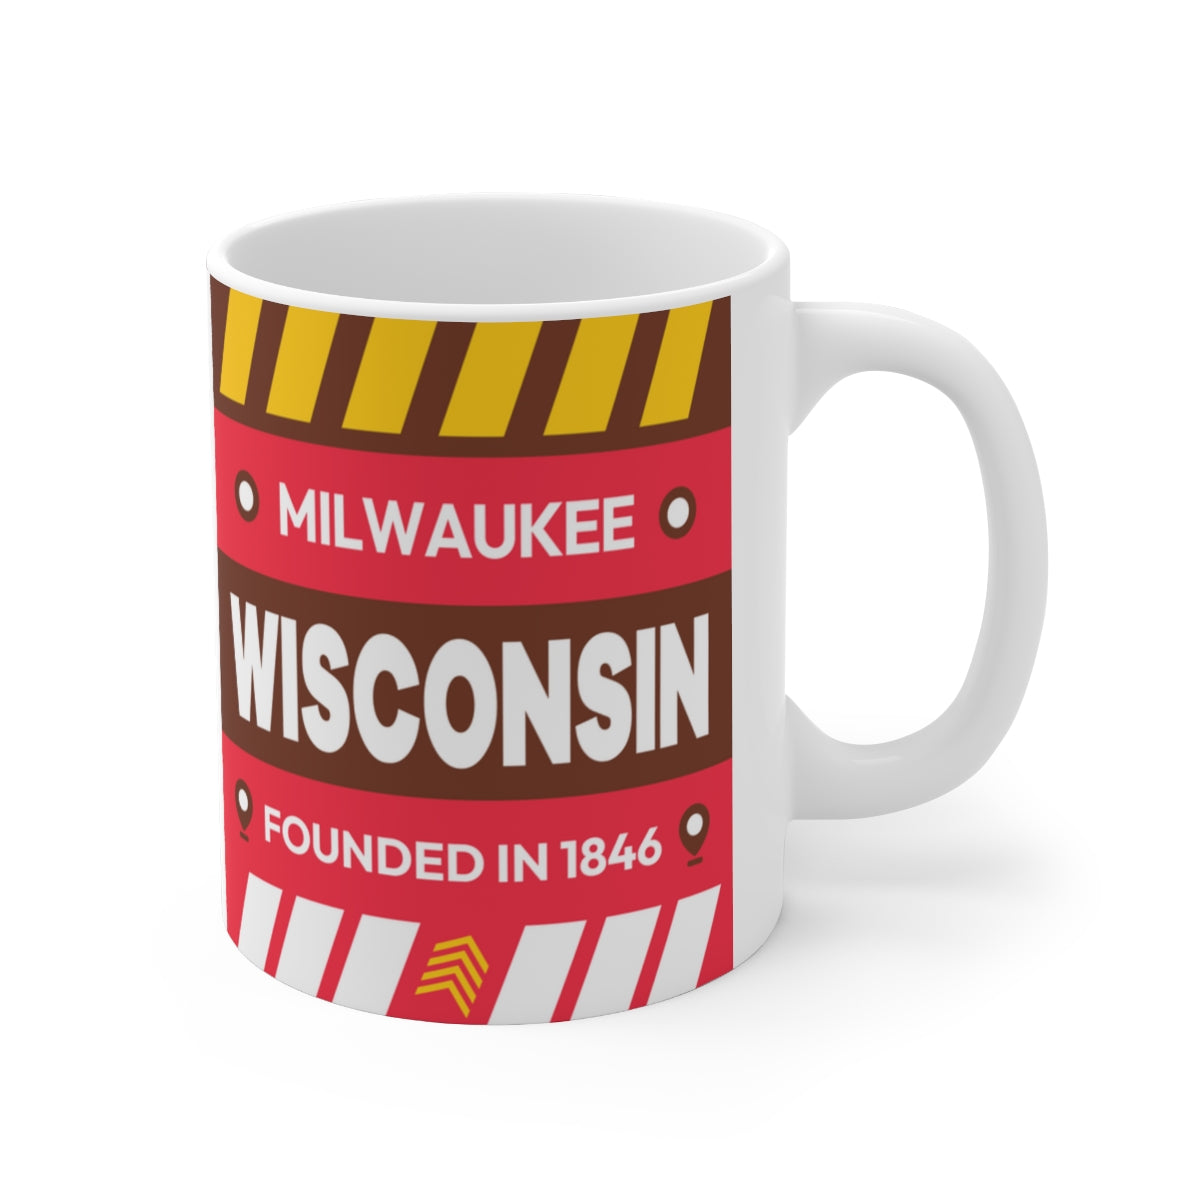 11oz Ceramic mug for Milwaukee, Wisconsin Side view